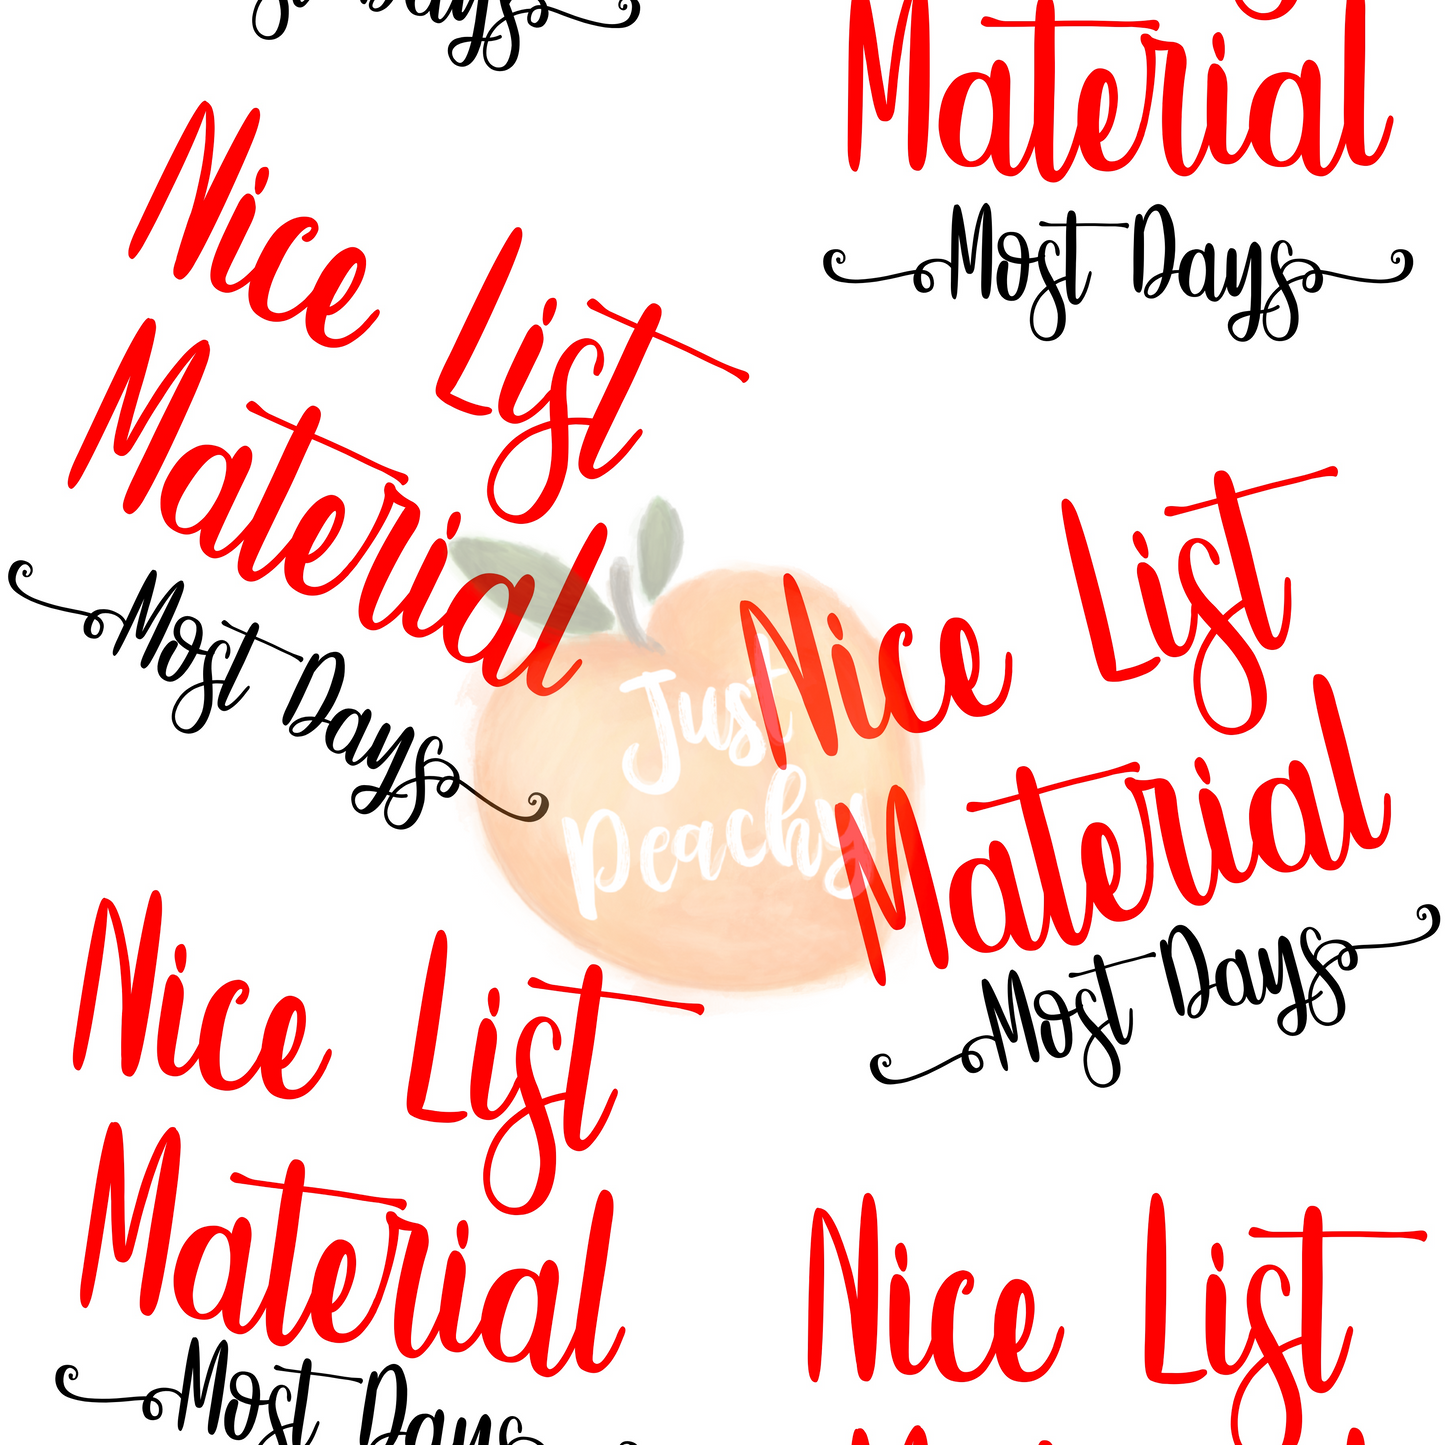 Nice List Material